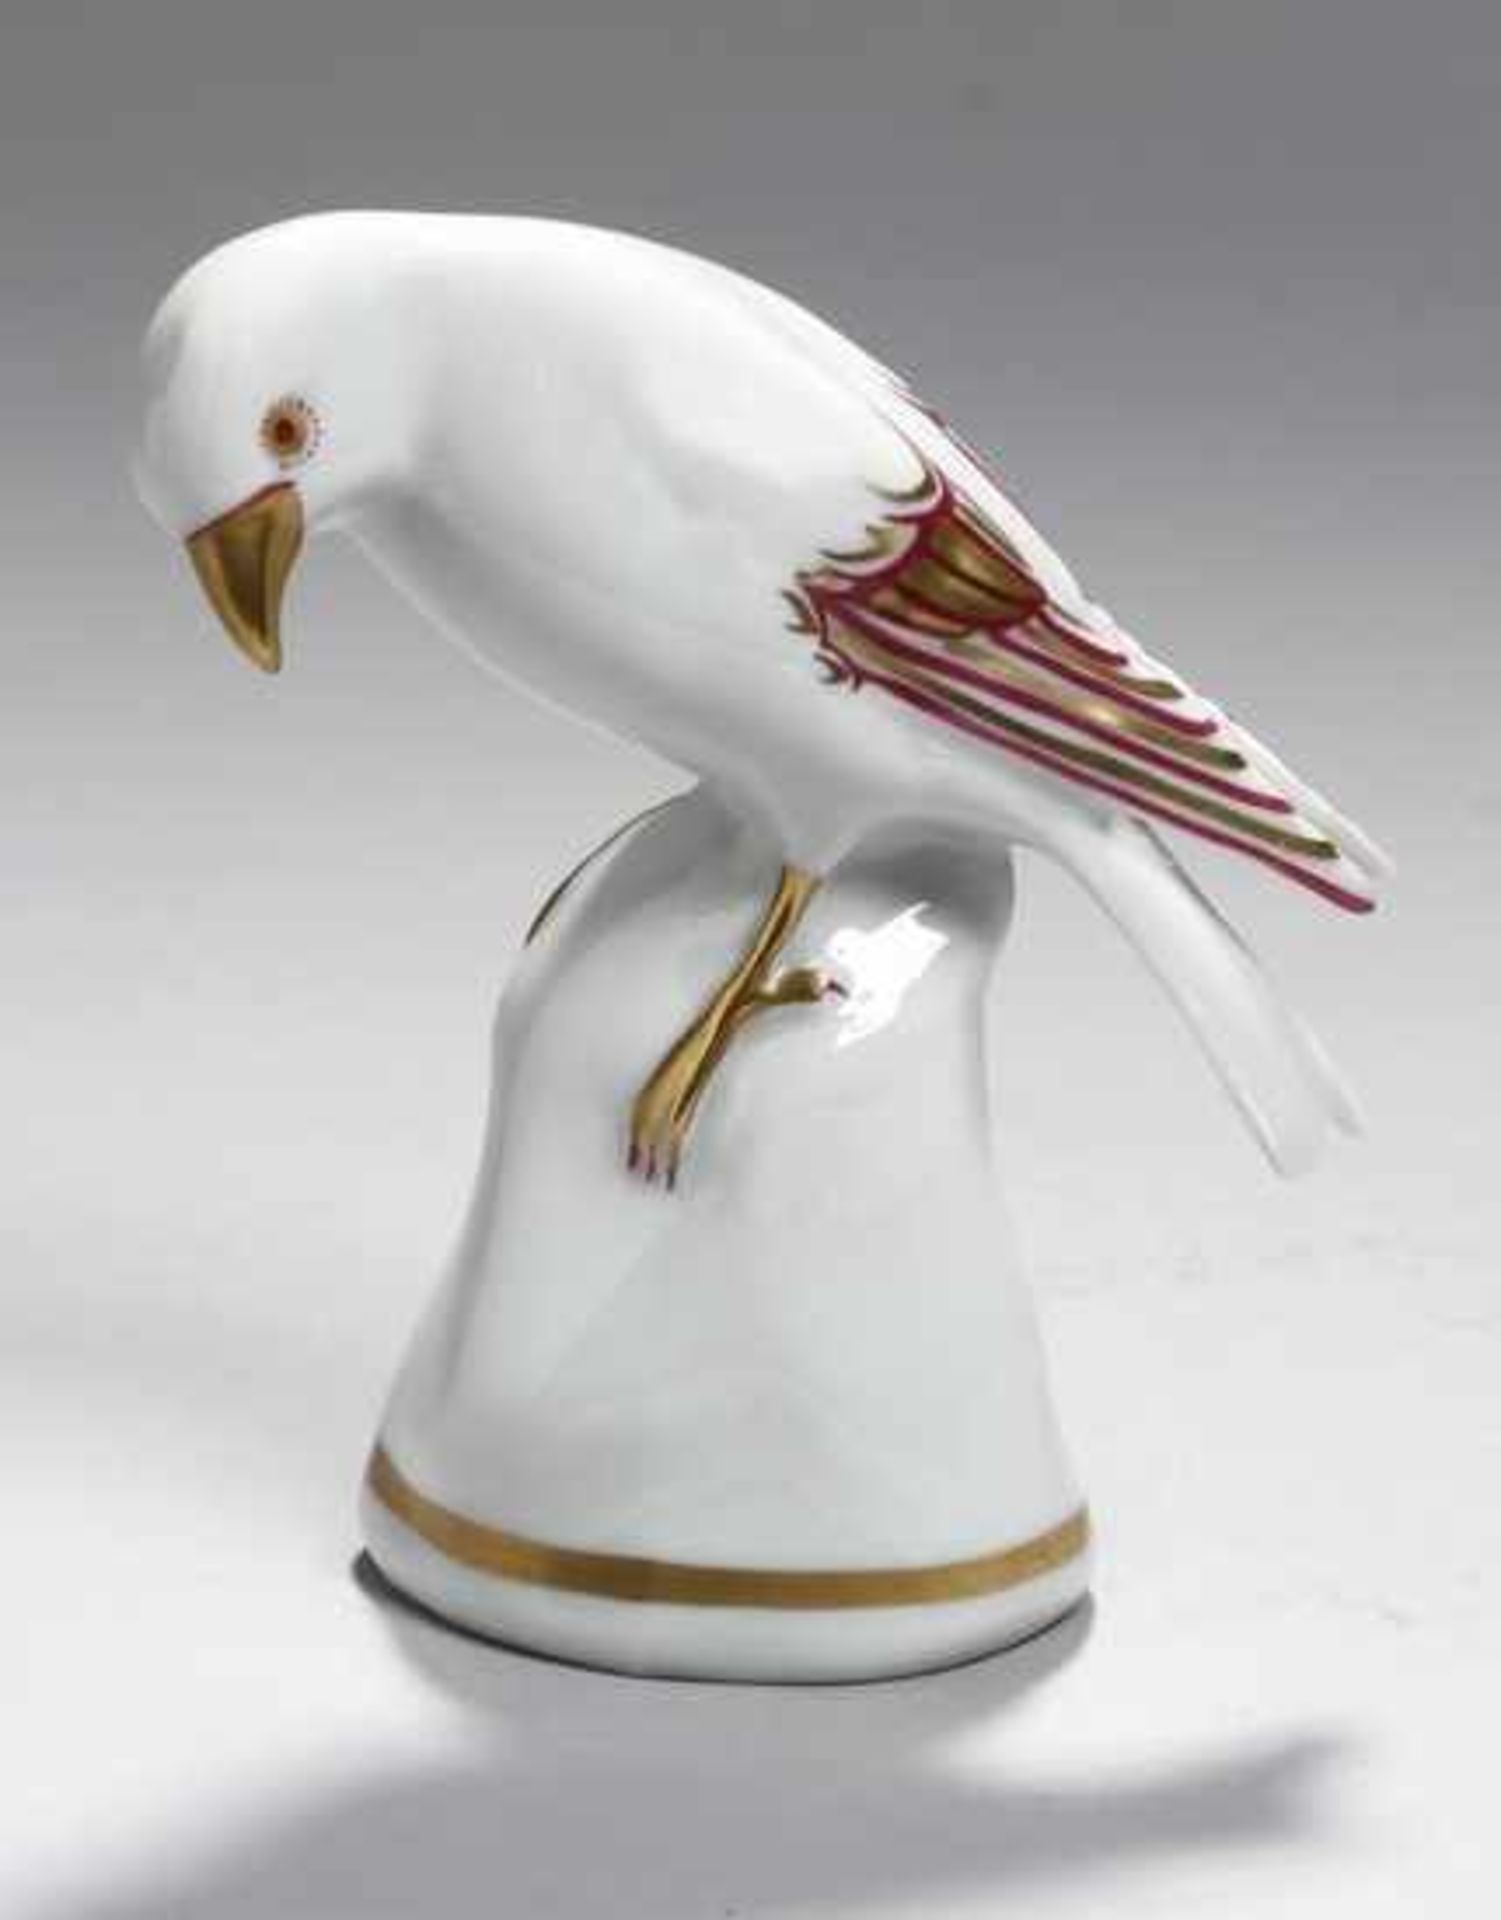 Porzellan-Tierplastik, "Vogel", Metzler & Ortloff, Ilmenau, um 1930, Mod.nr.: 4343,